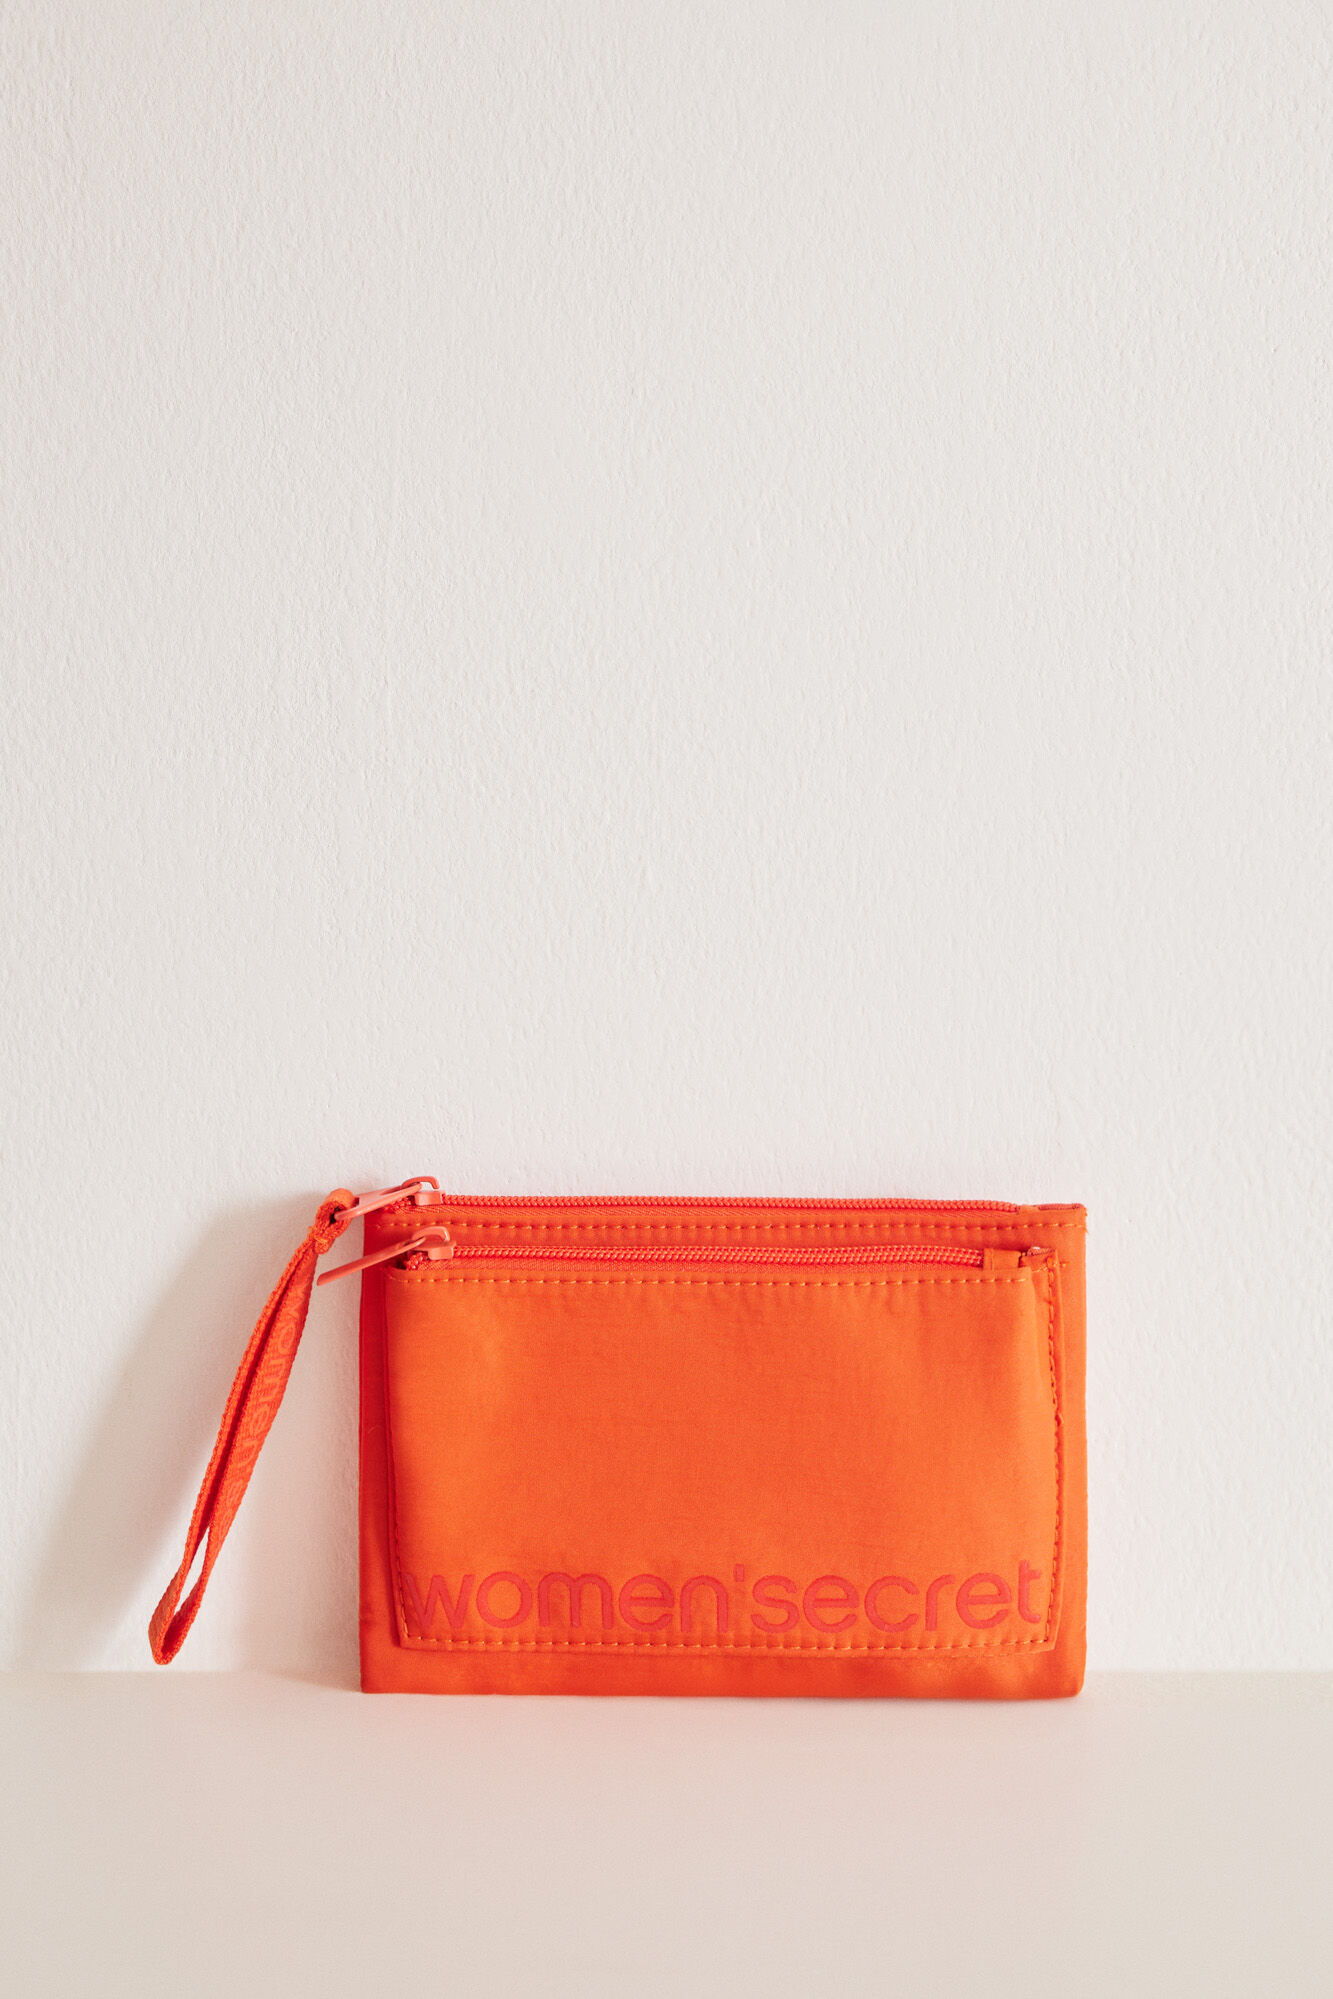 Telfar Shopping Bag Small Orange | Bags, Small bags, Orange purse